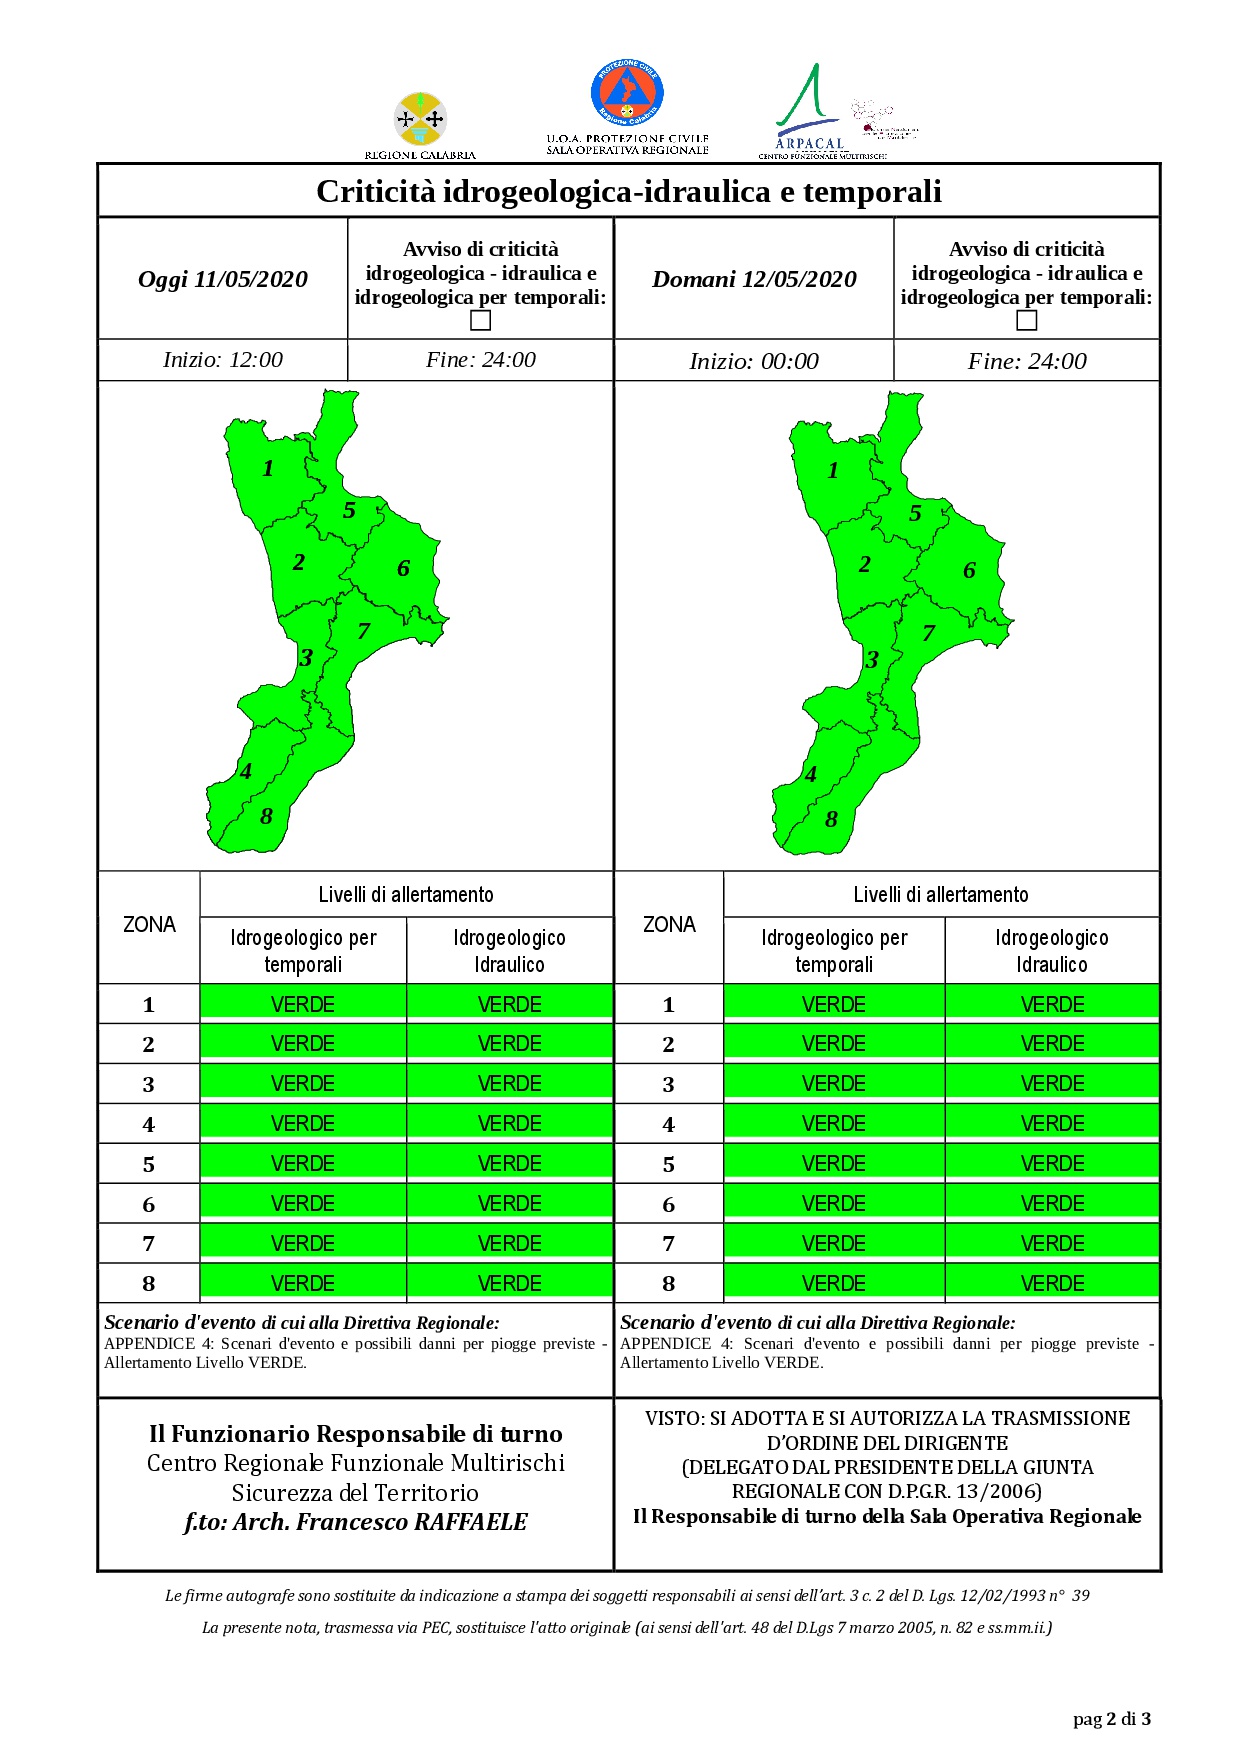 Criticità idrogeologica-idraulica e temporali in Calabria 11-05-2020